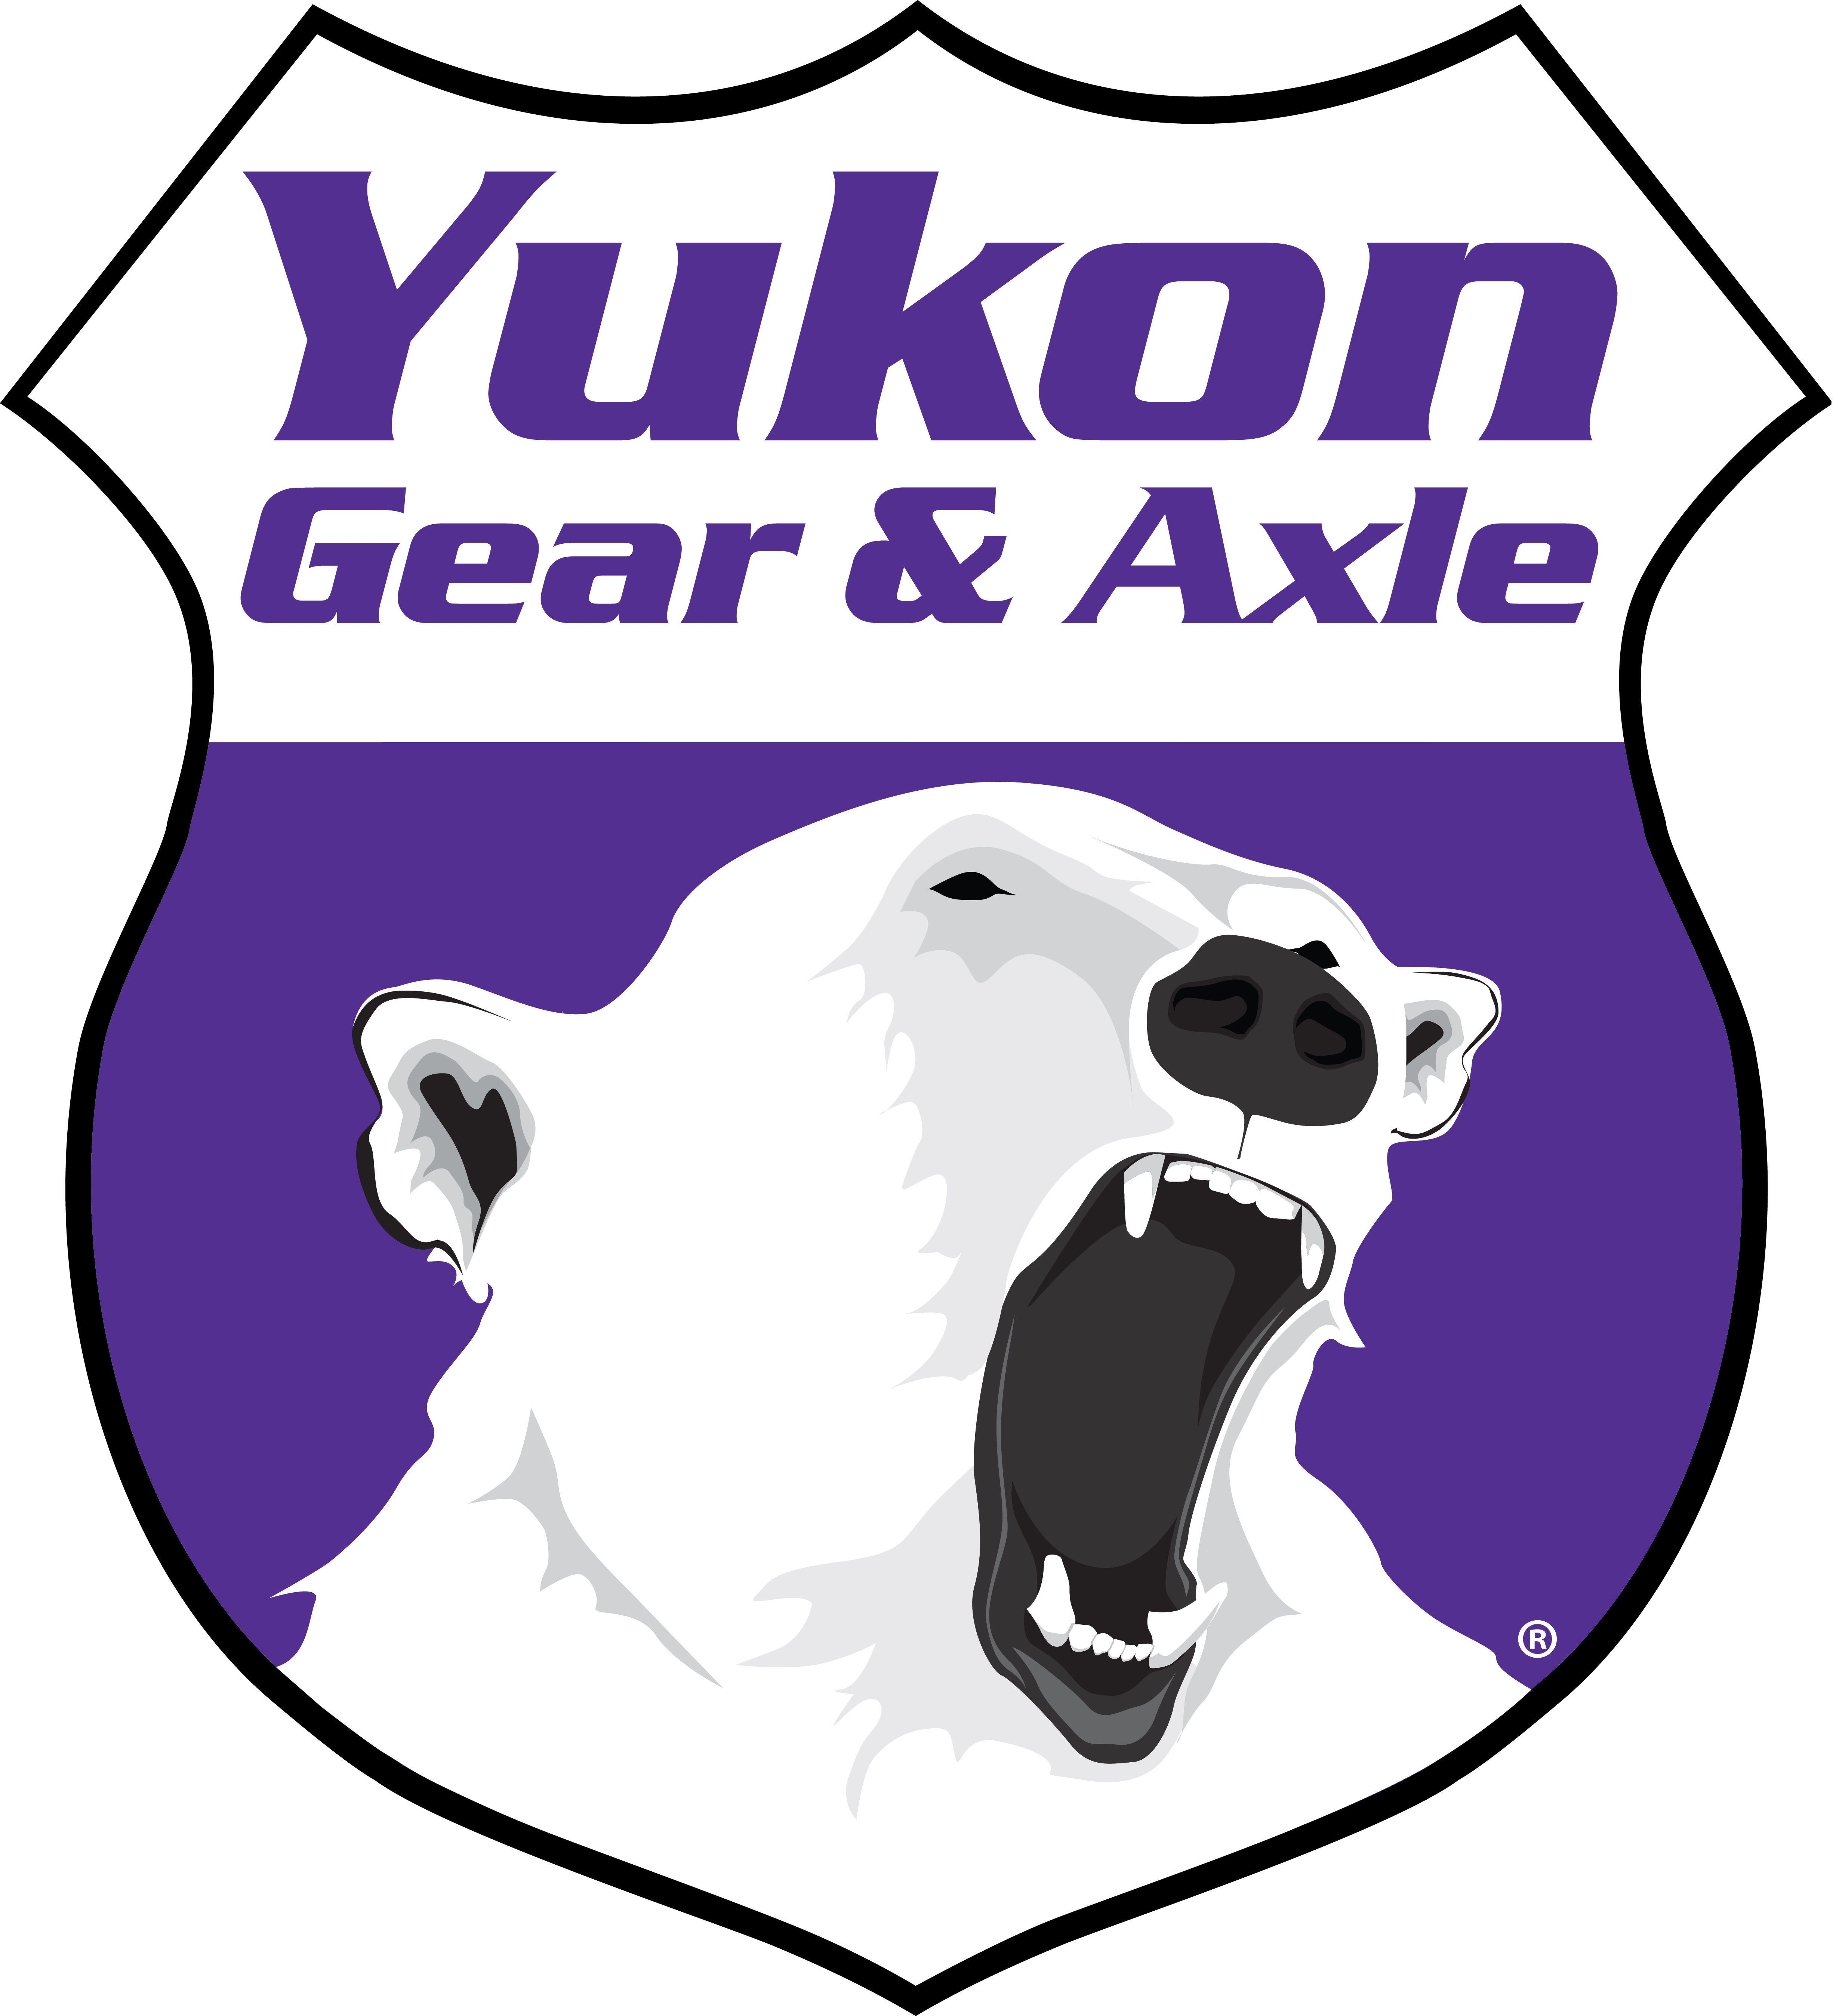 Yukon yoke for 8.2" BOP differential, Mech 3R u/joint size, u/bolt design. 